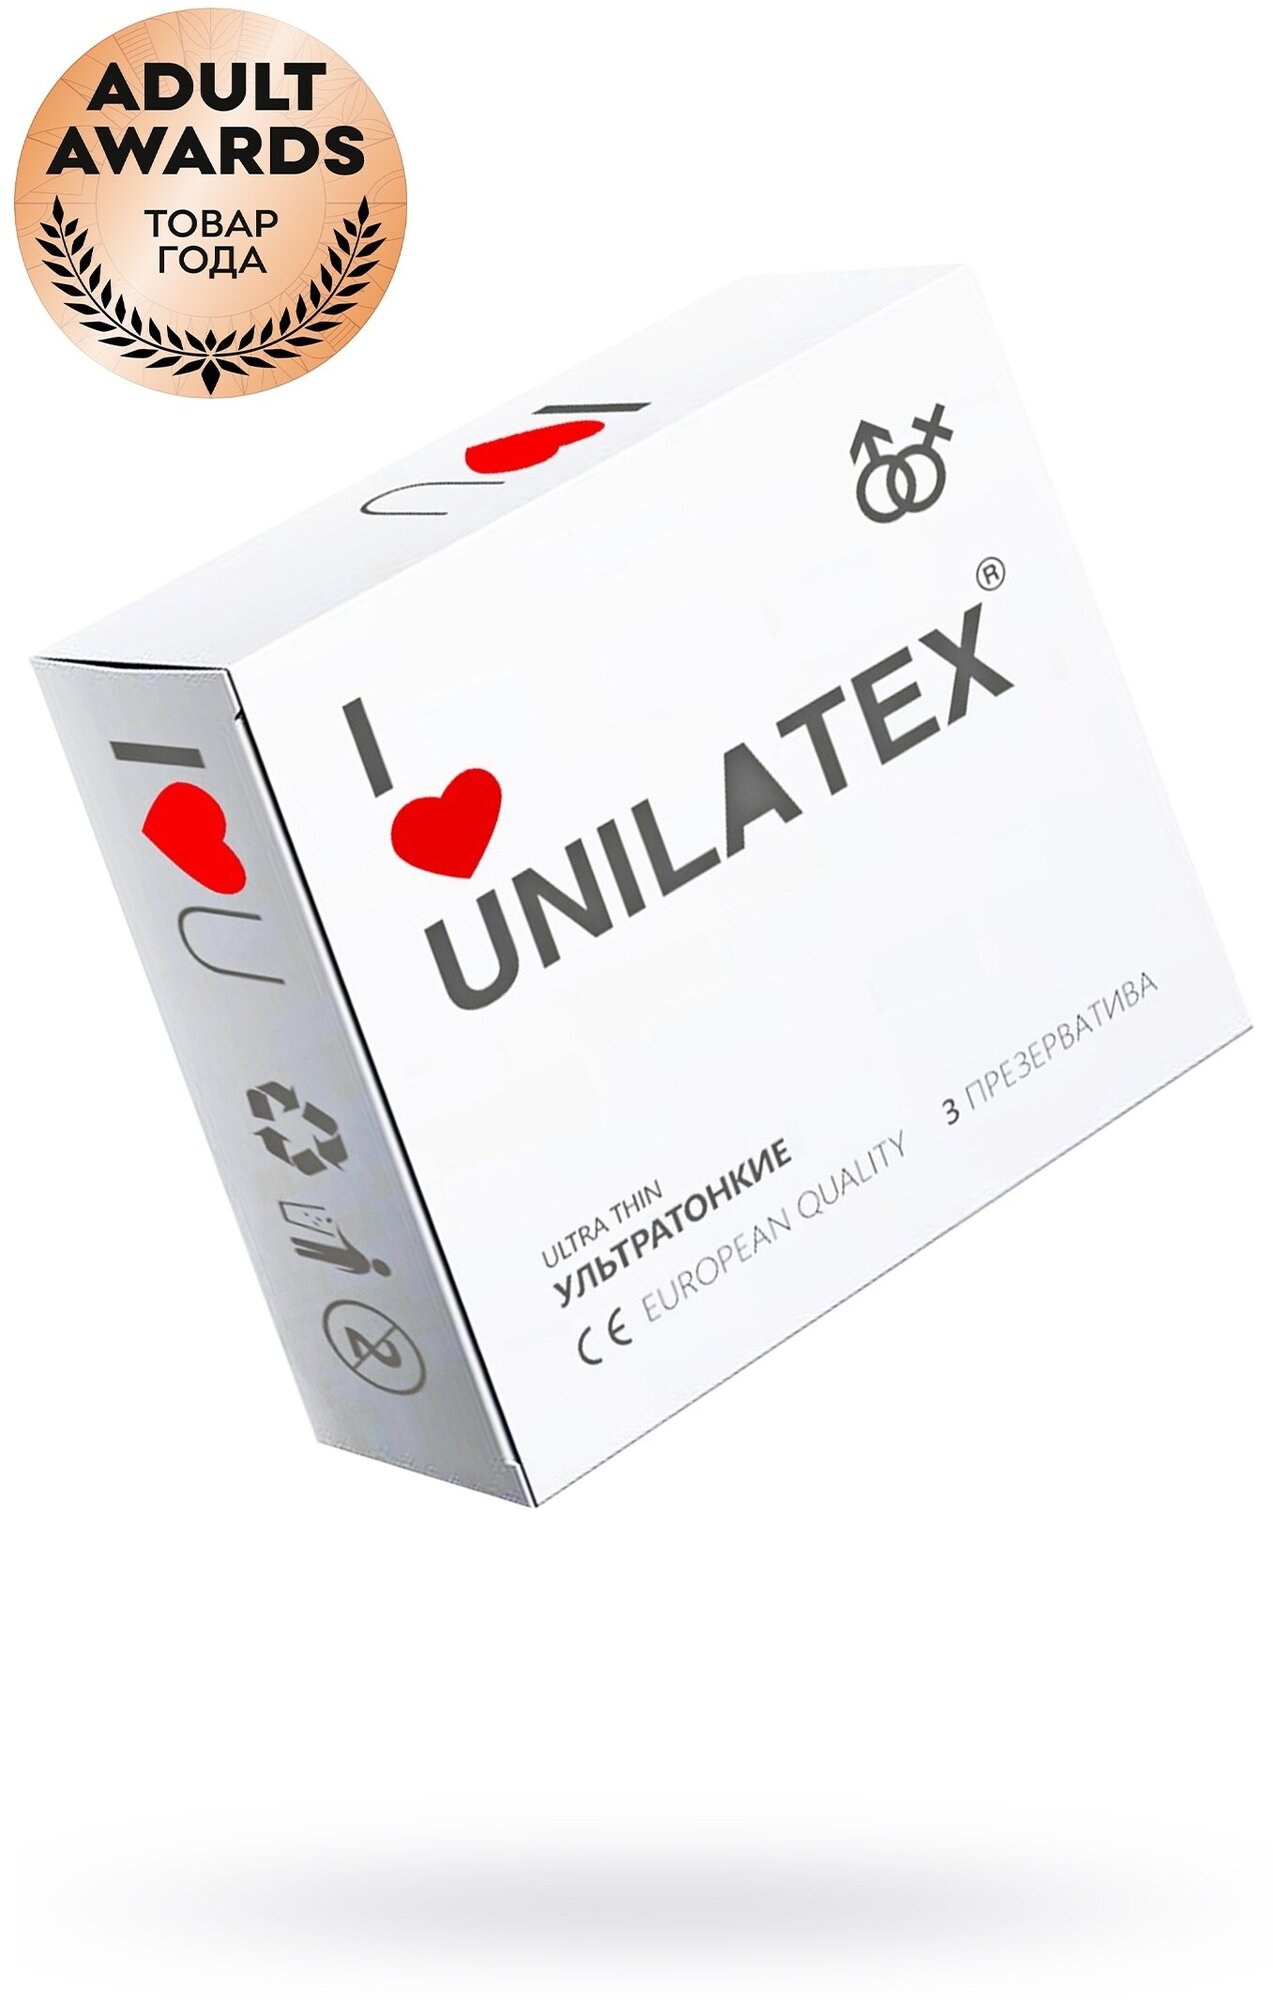 Unilatex / Презервативы Unilatex Ultra Thin 3 шт, ультратонкие.